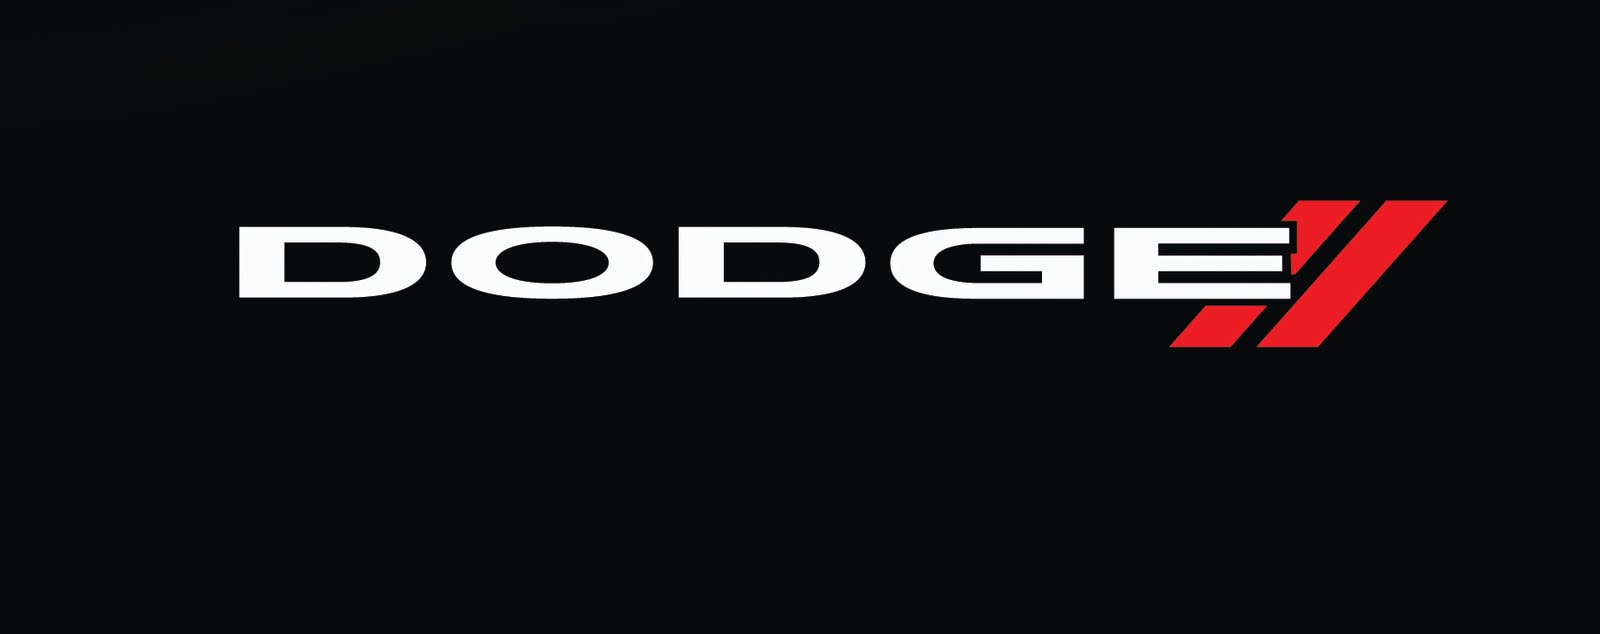 Dodge-emblem